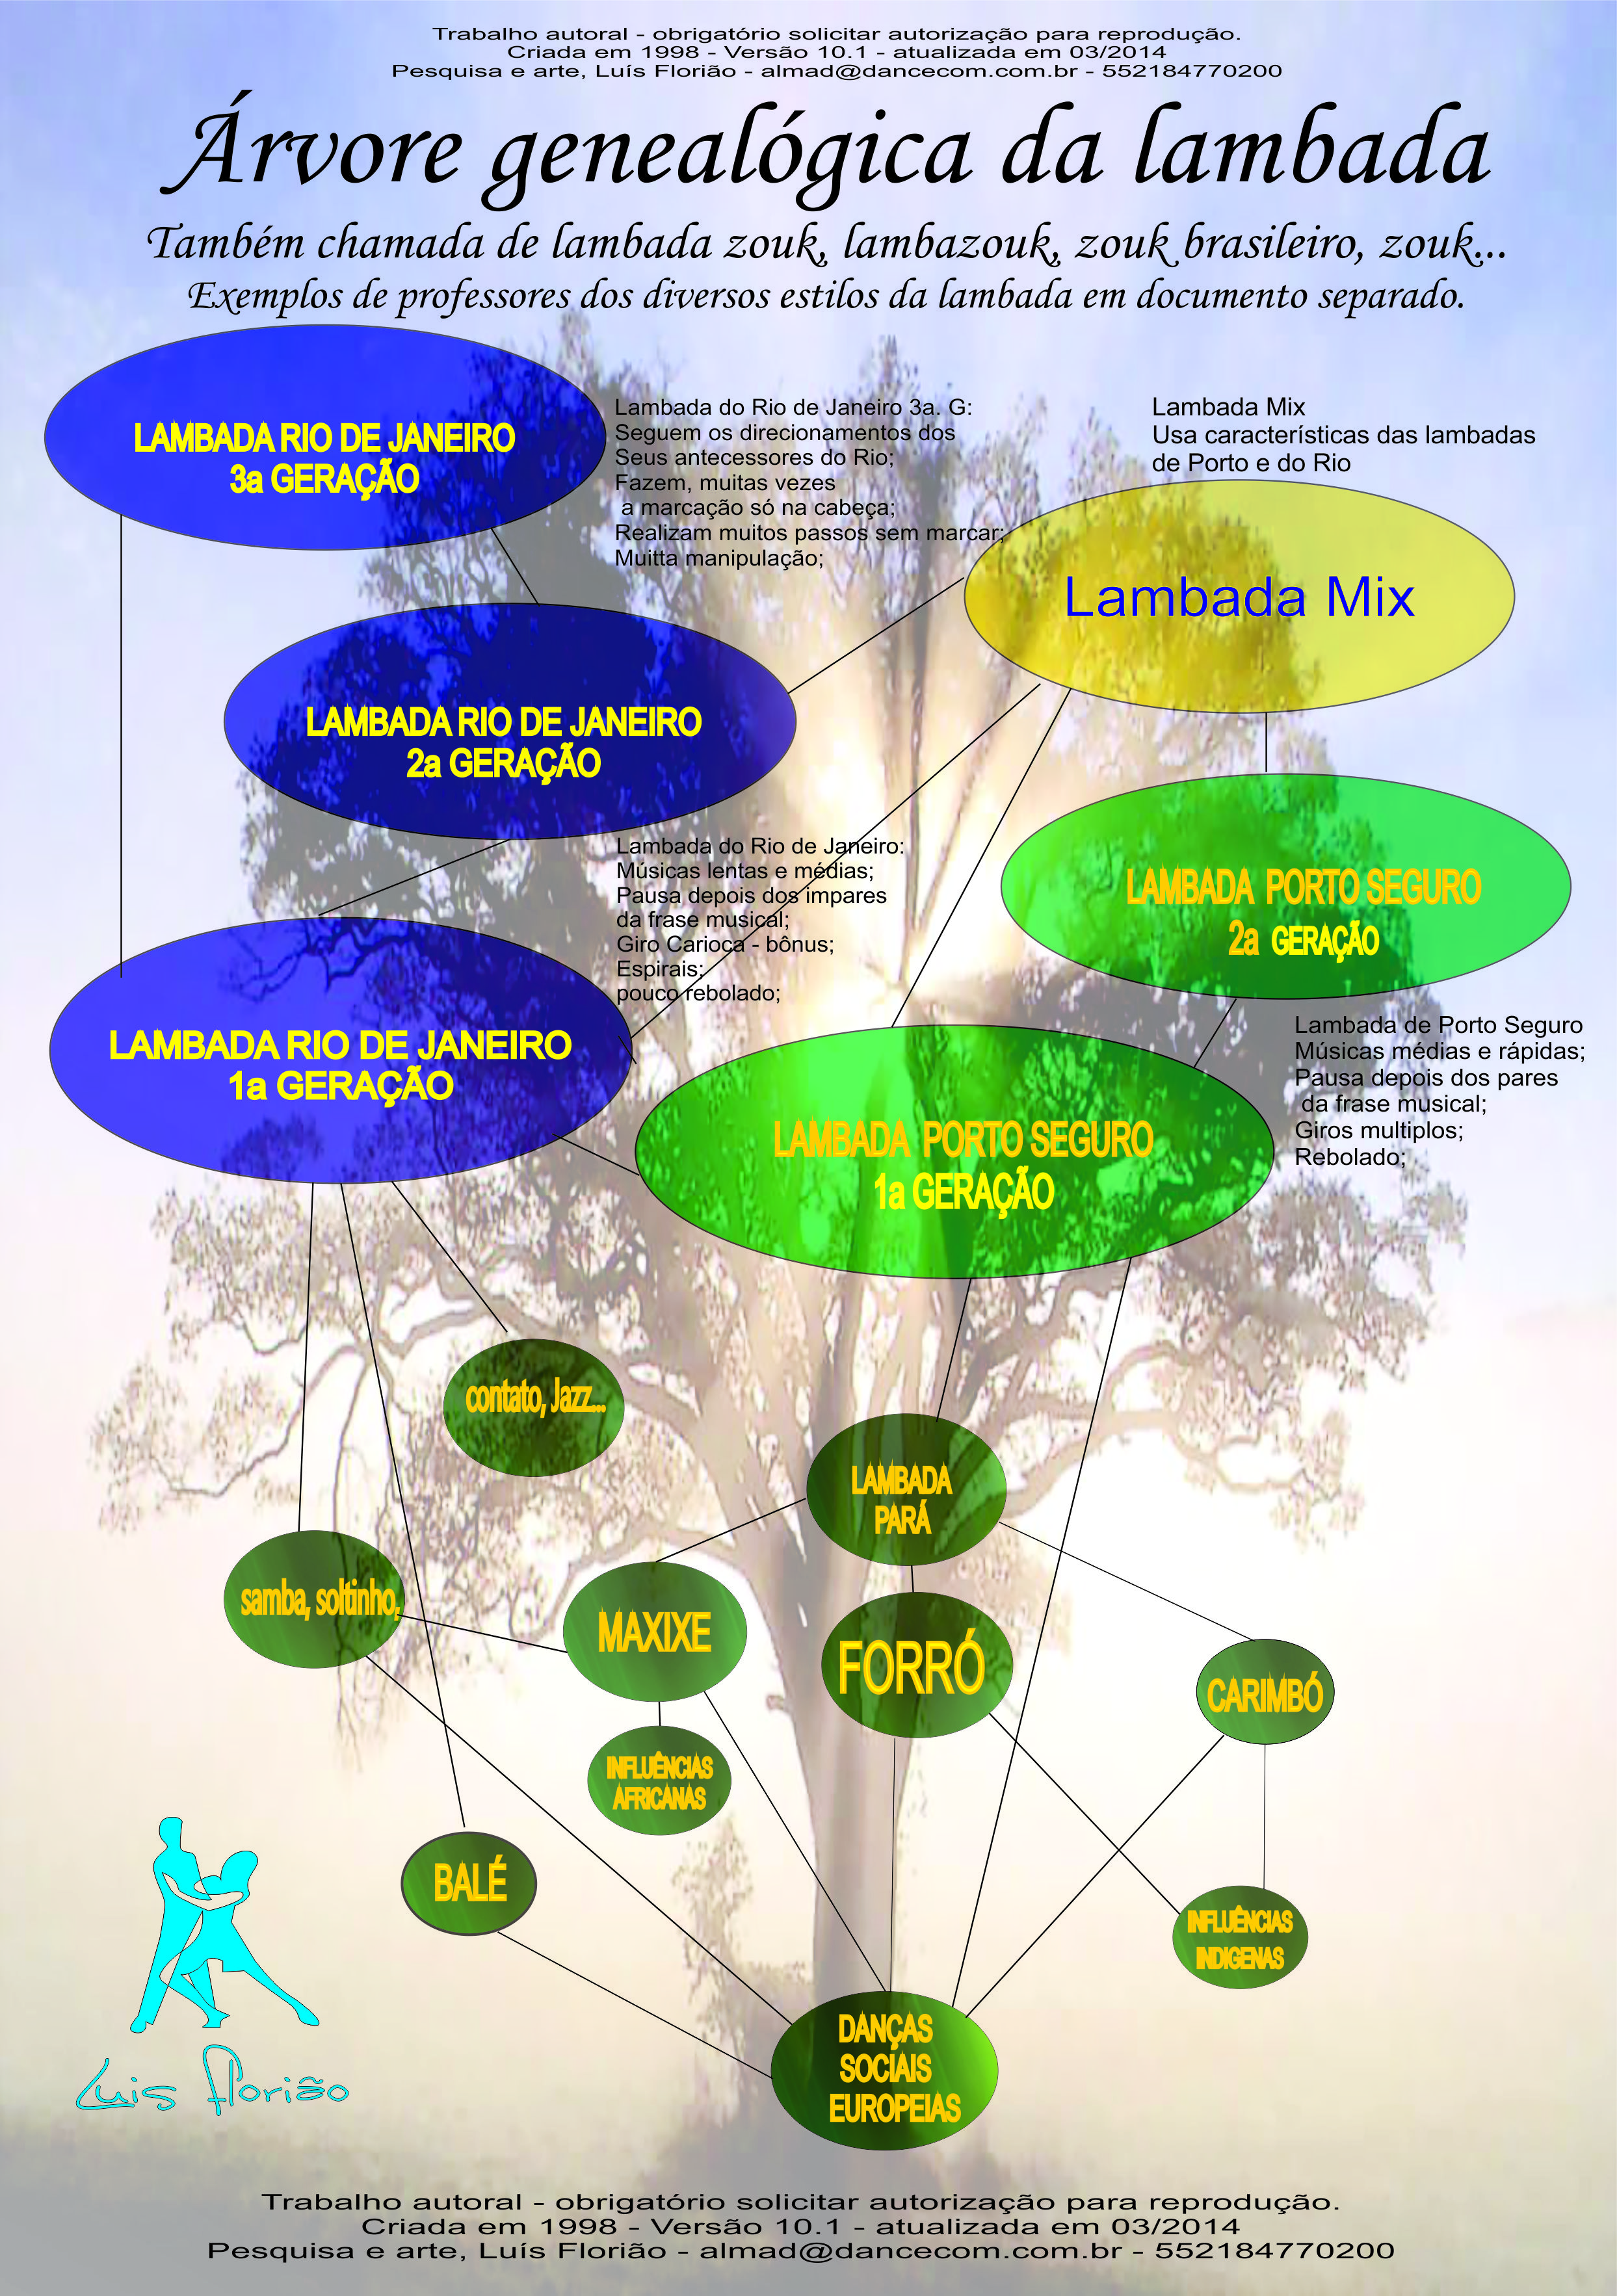 Genealogical tree of lambada-- courtesy Luis Floriao.